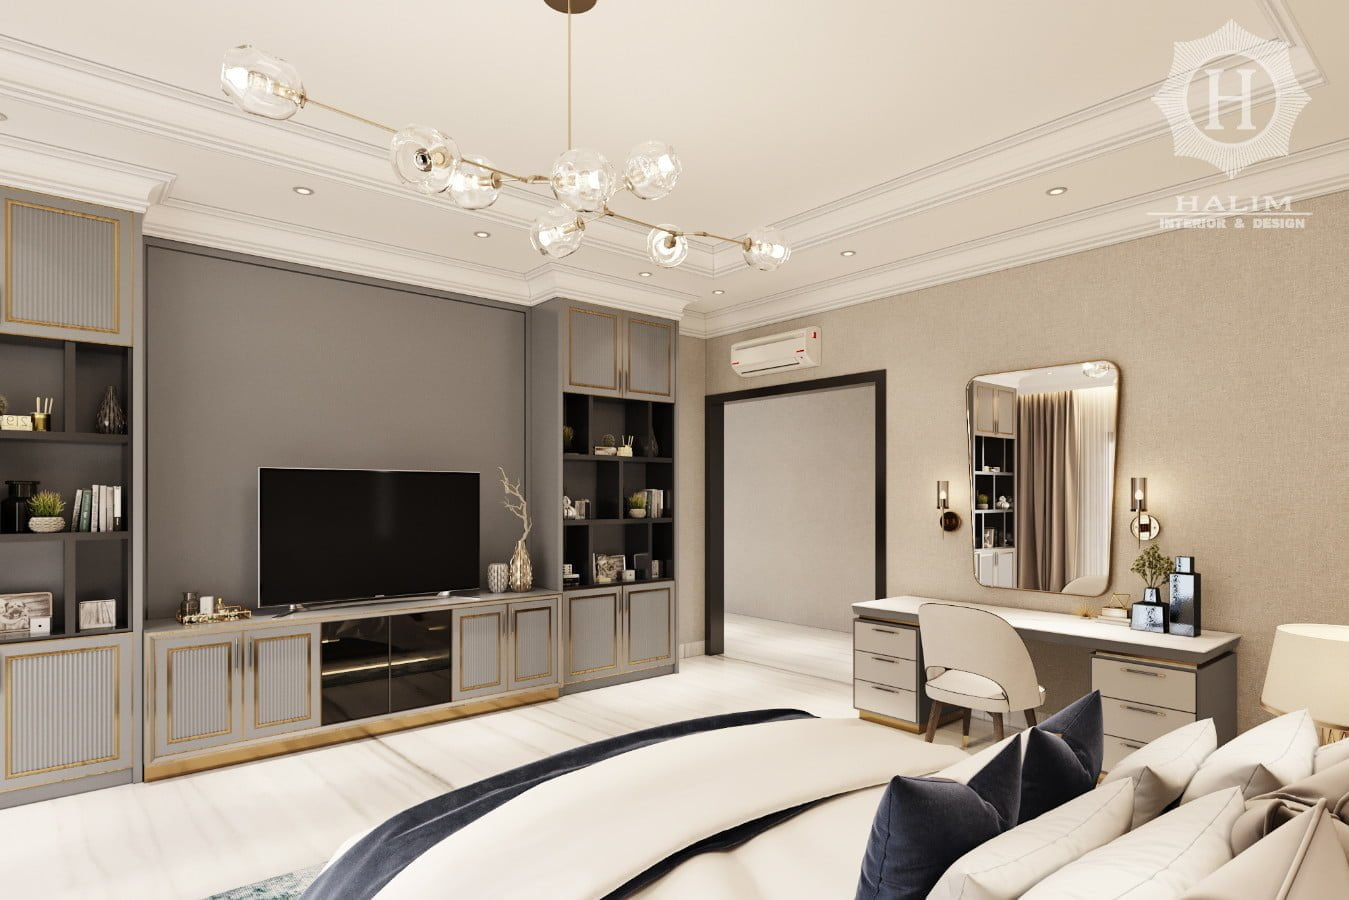 Halim Interior modern furniture contemporer american style minimalist european classic surabaya 67.PUNCAK PERMAI